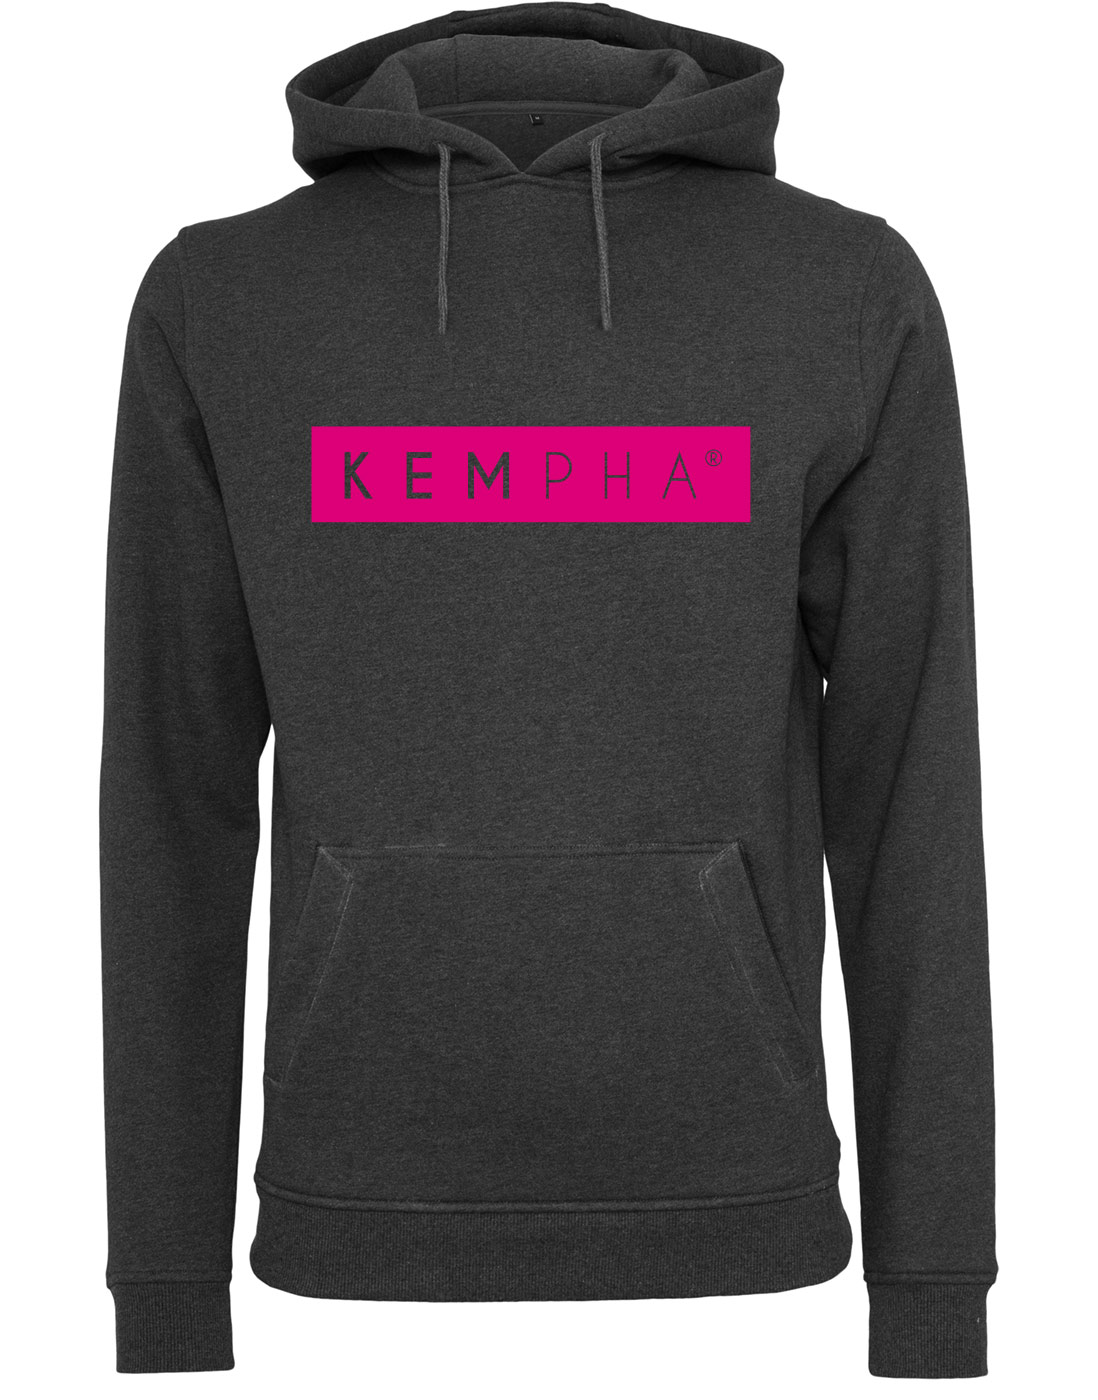 Kempha Premium Hoodie NEONraspberry auf charcoal